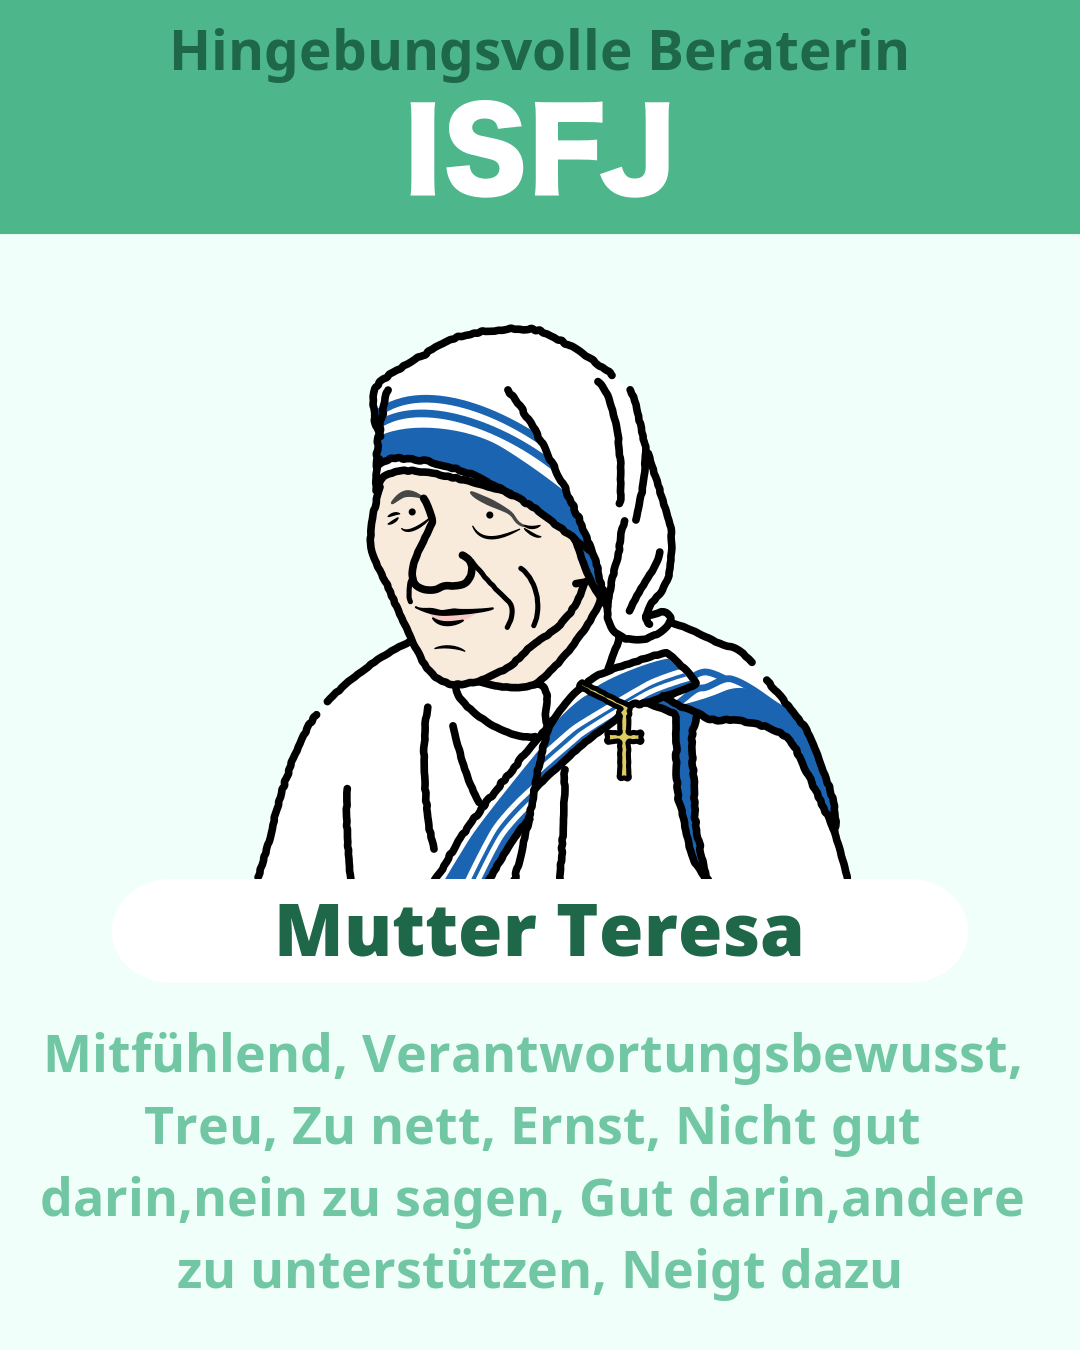 Mutter Teresa - ISFJ